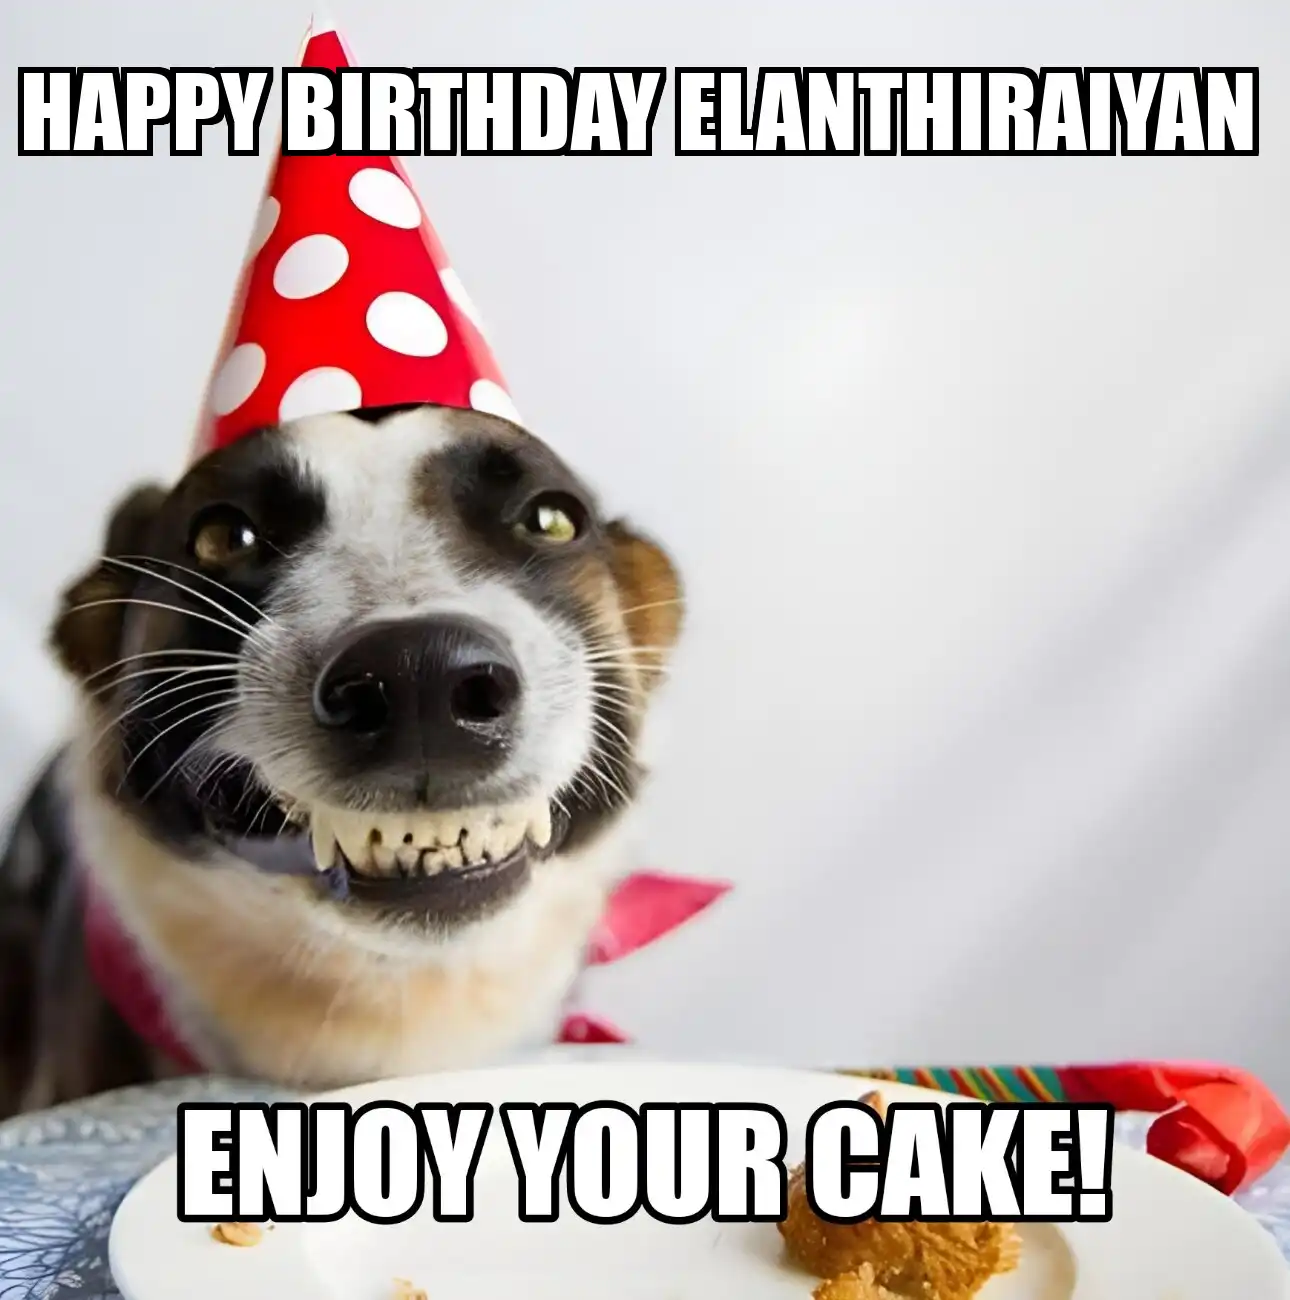 Happy Birthday Elanthiraiyan Enjoy Your Cake Dog Meme